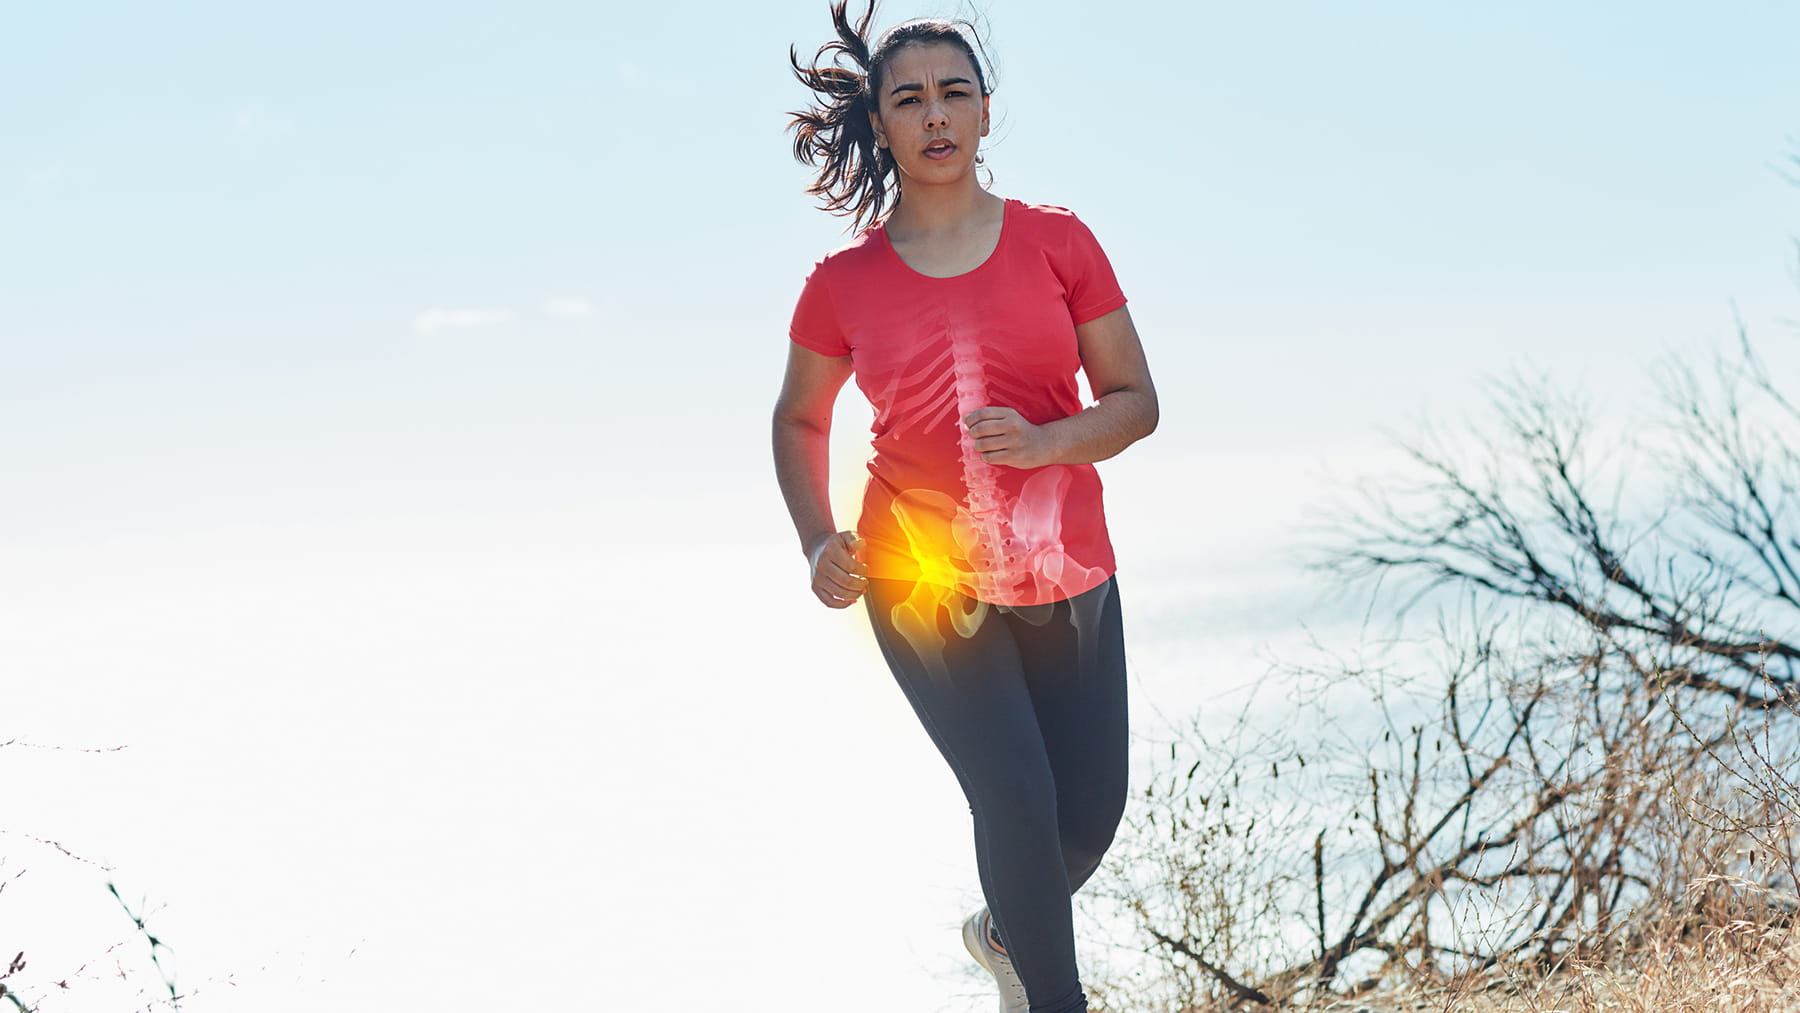 Women running while ignoring her hip pain